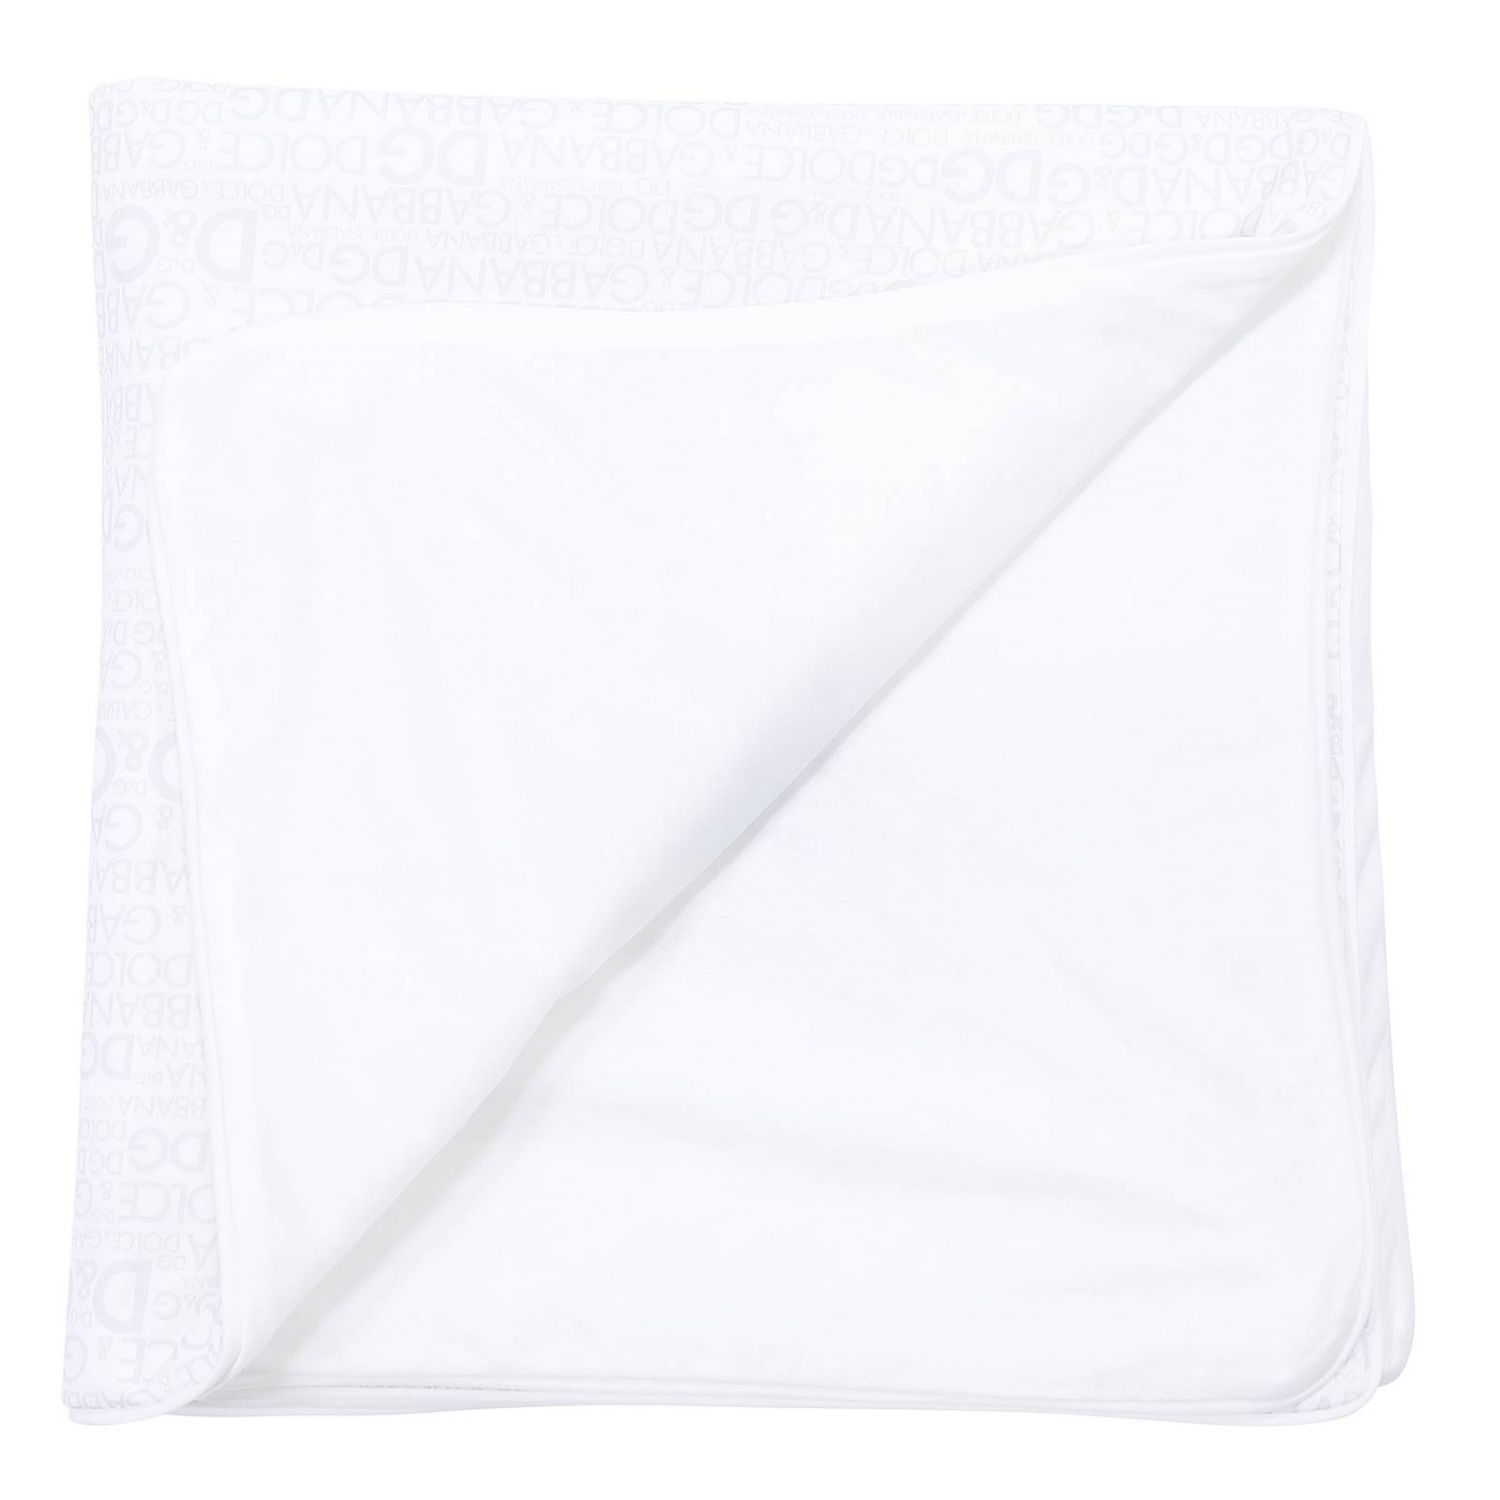 Dolce & Gabbana Outlet: blanket for kids - White | Dolce & Gabbana blanket  LNJA51 G7OAO online on 